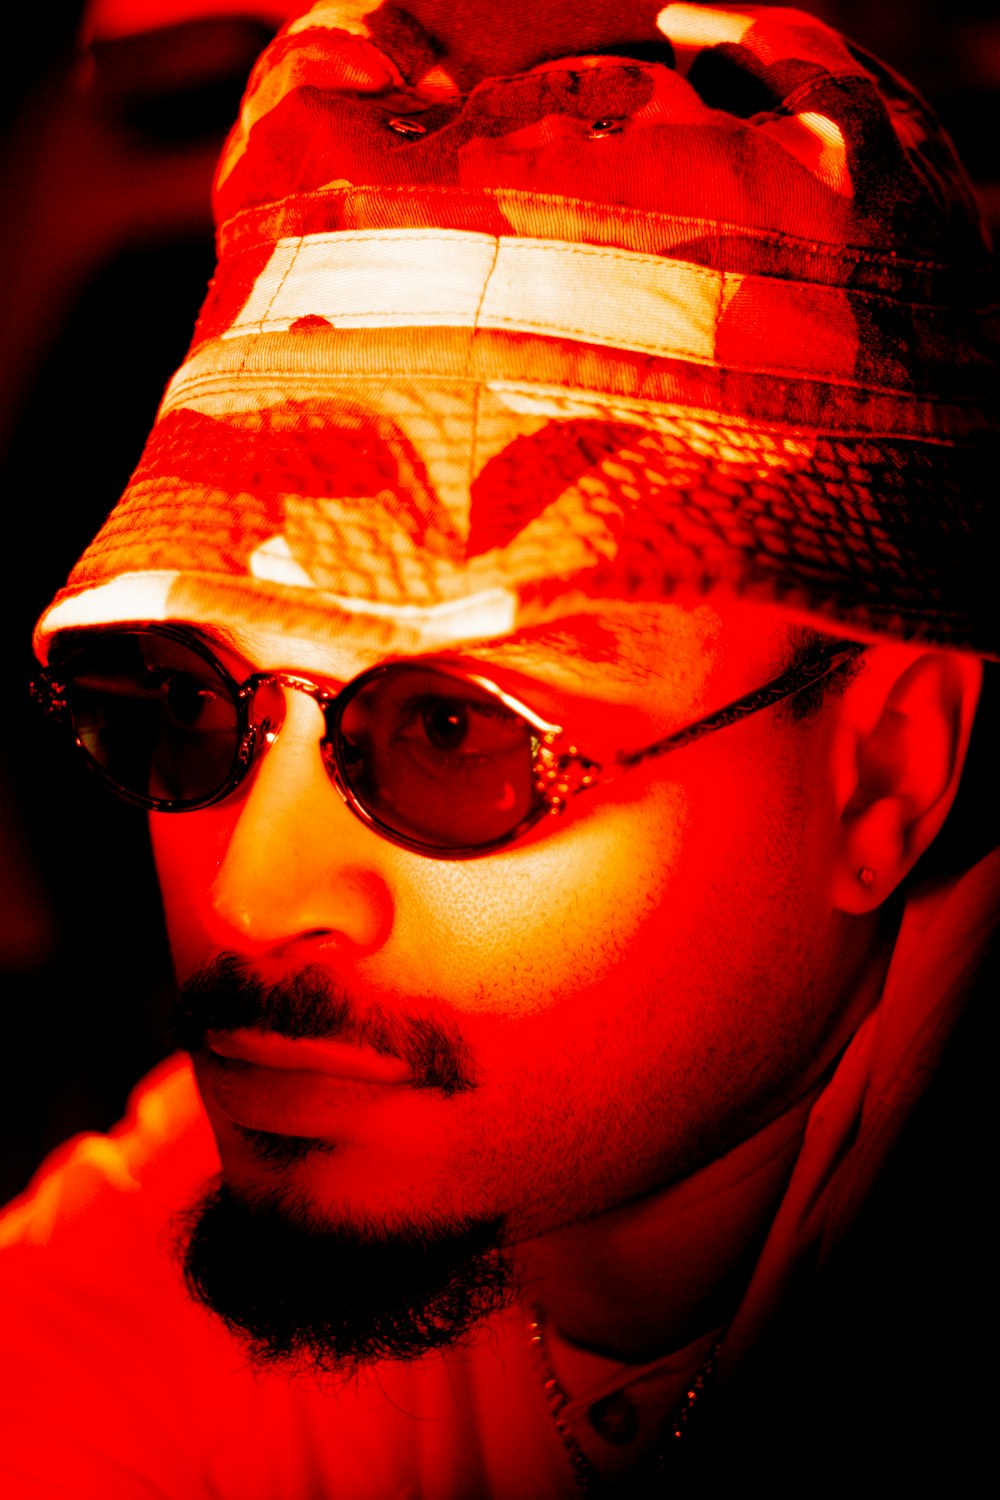 man wearing black framed sunglasses